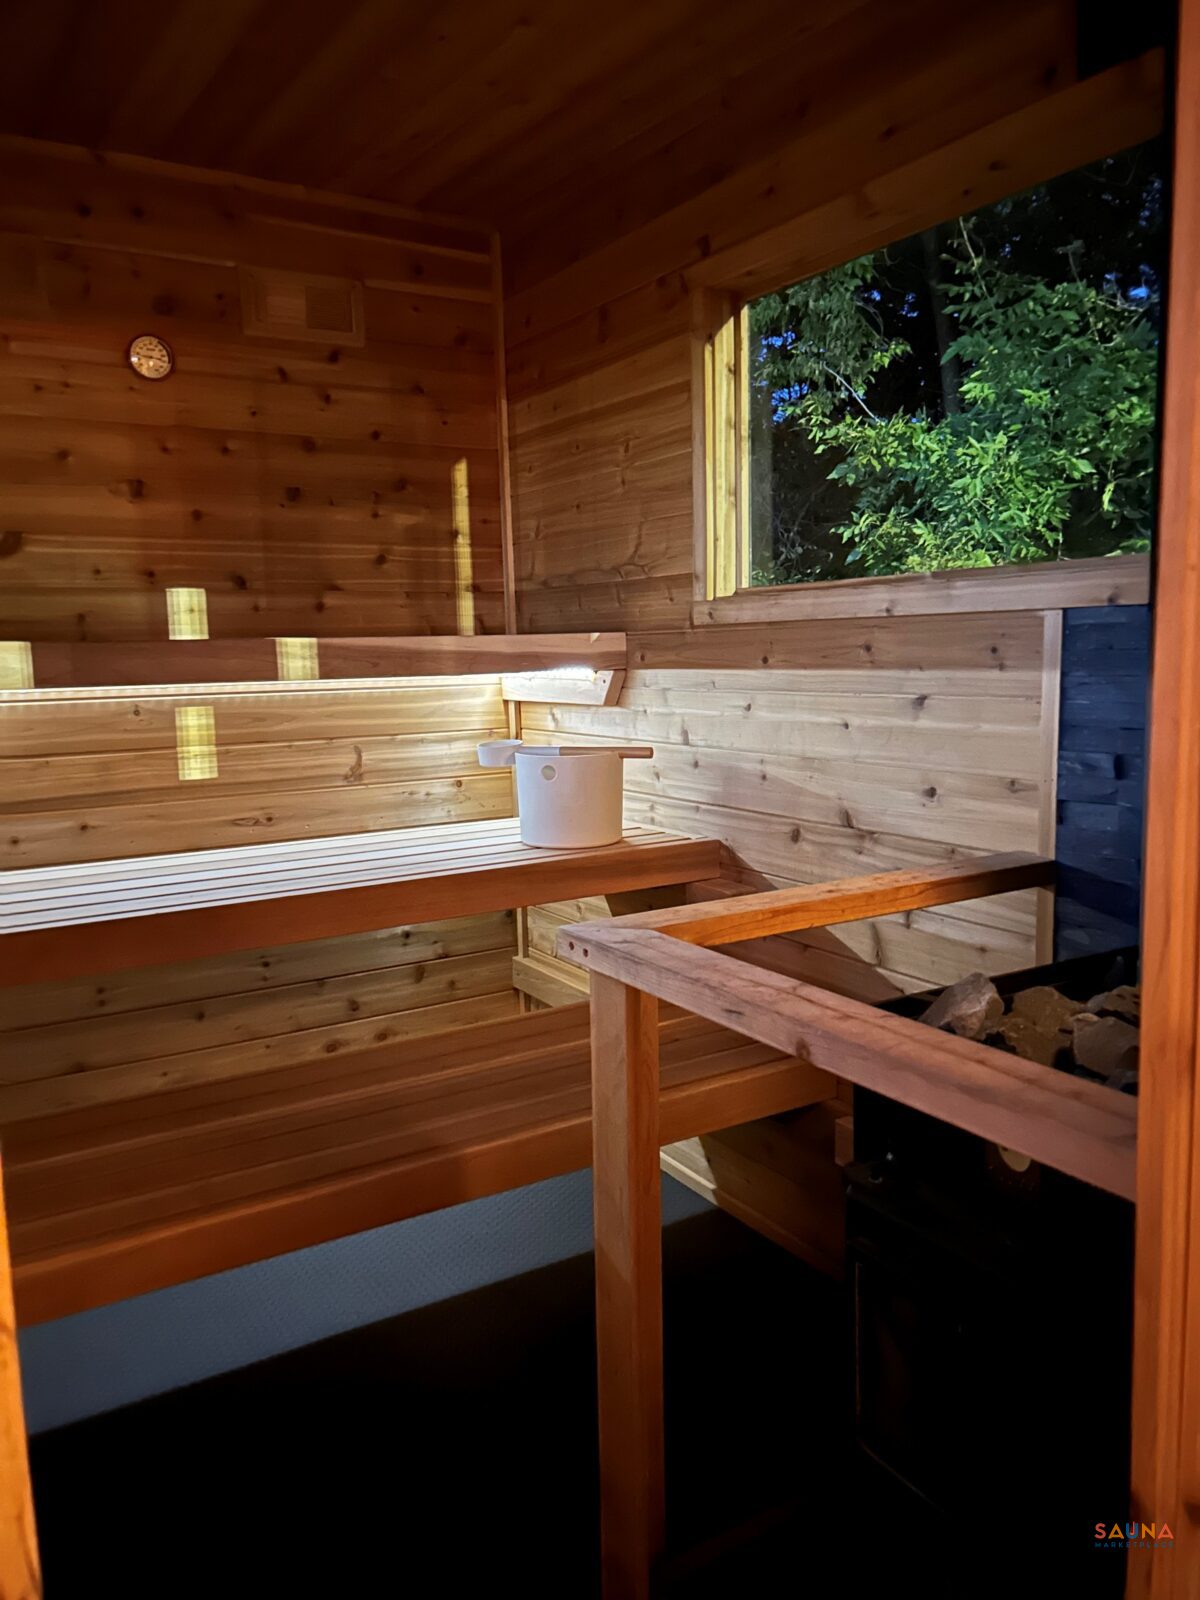 Sauna Room With Window And Wood Fired Stove